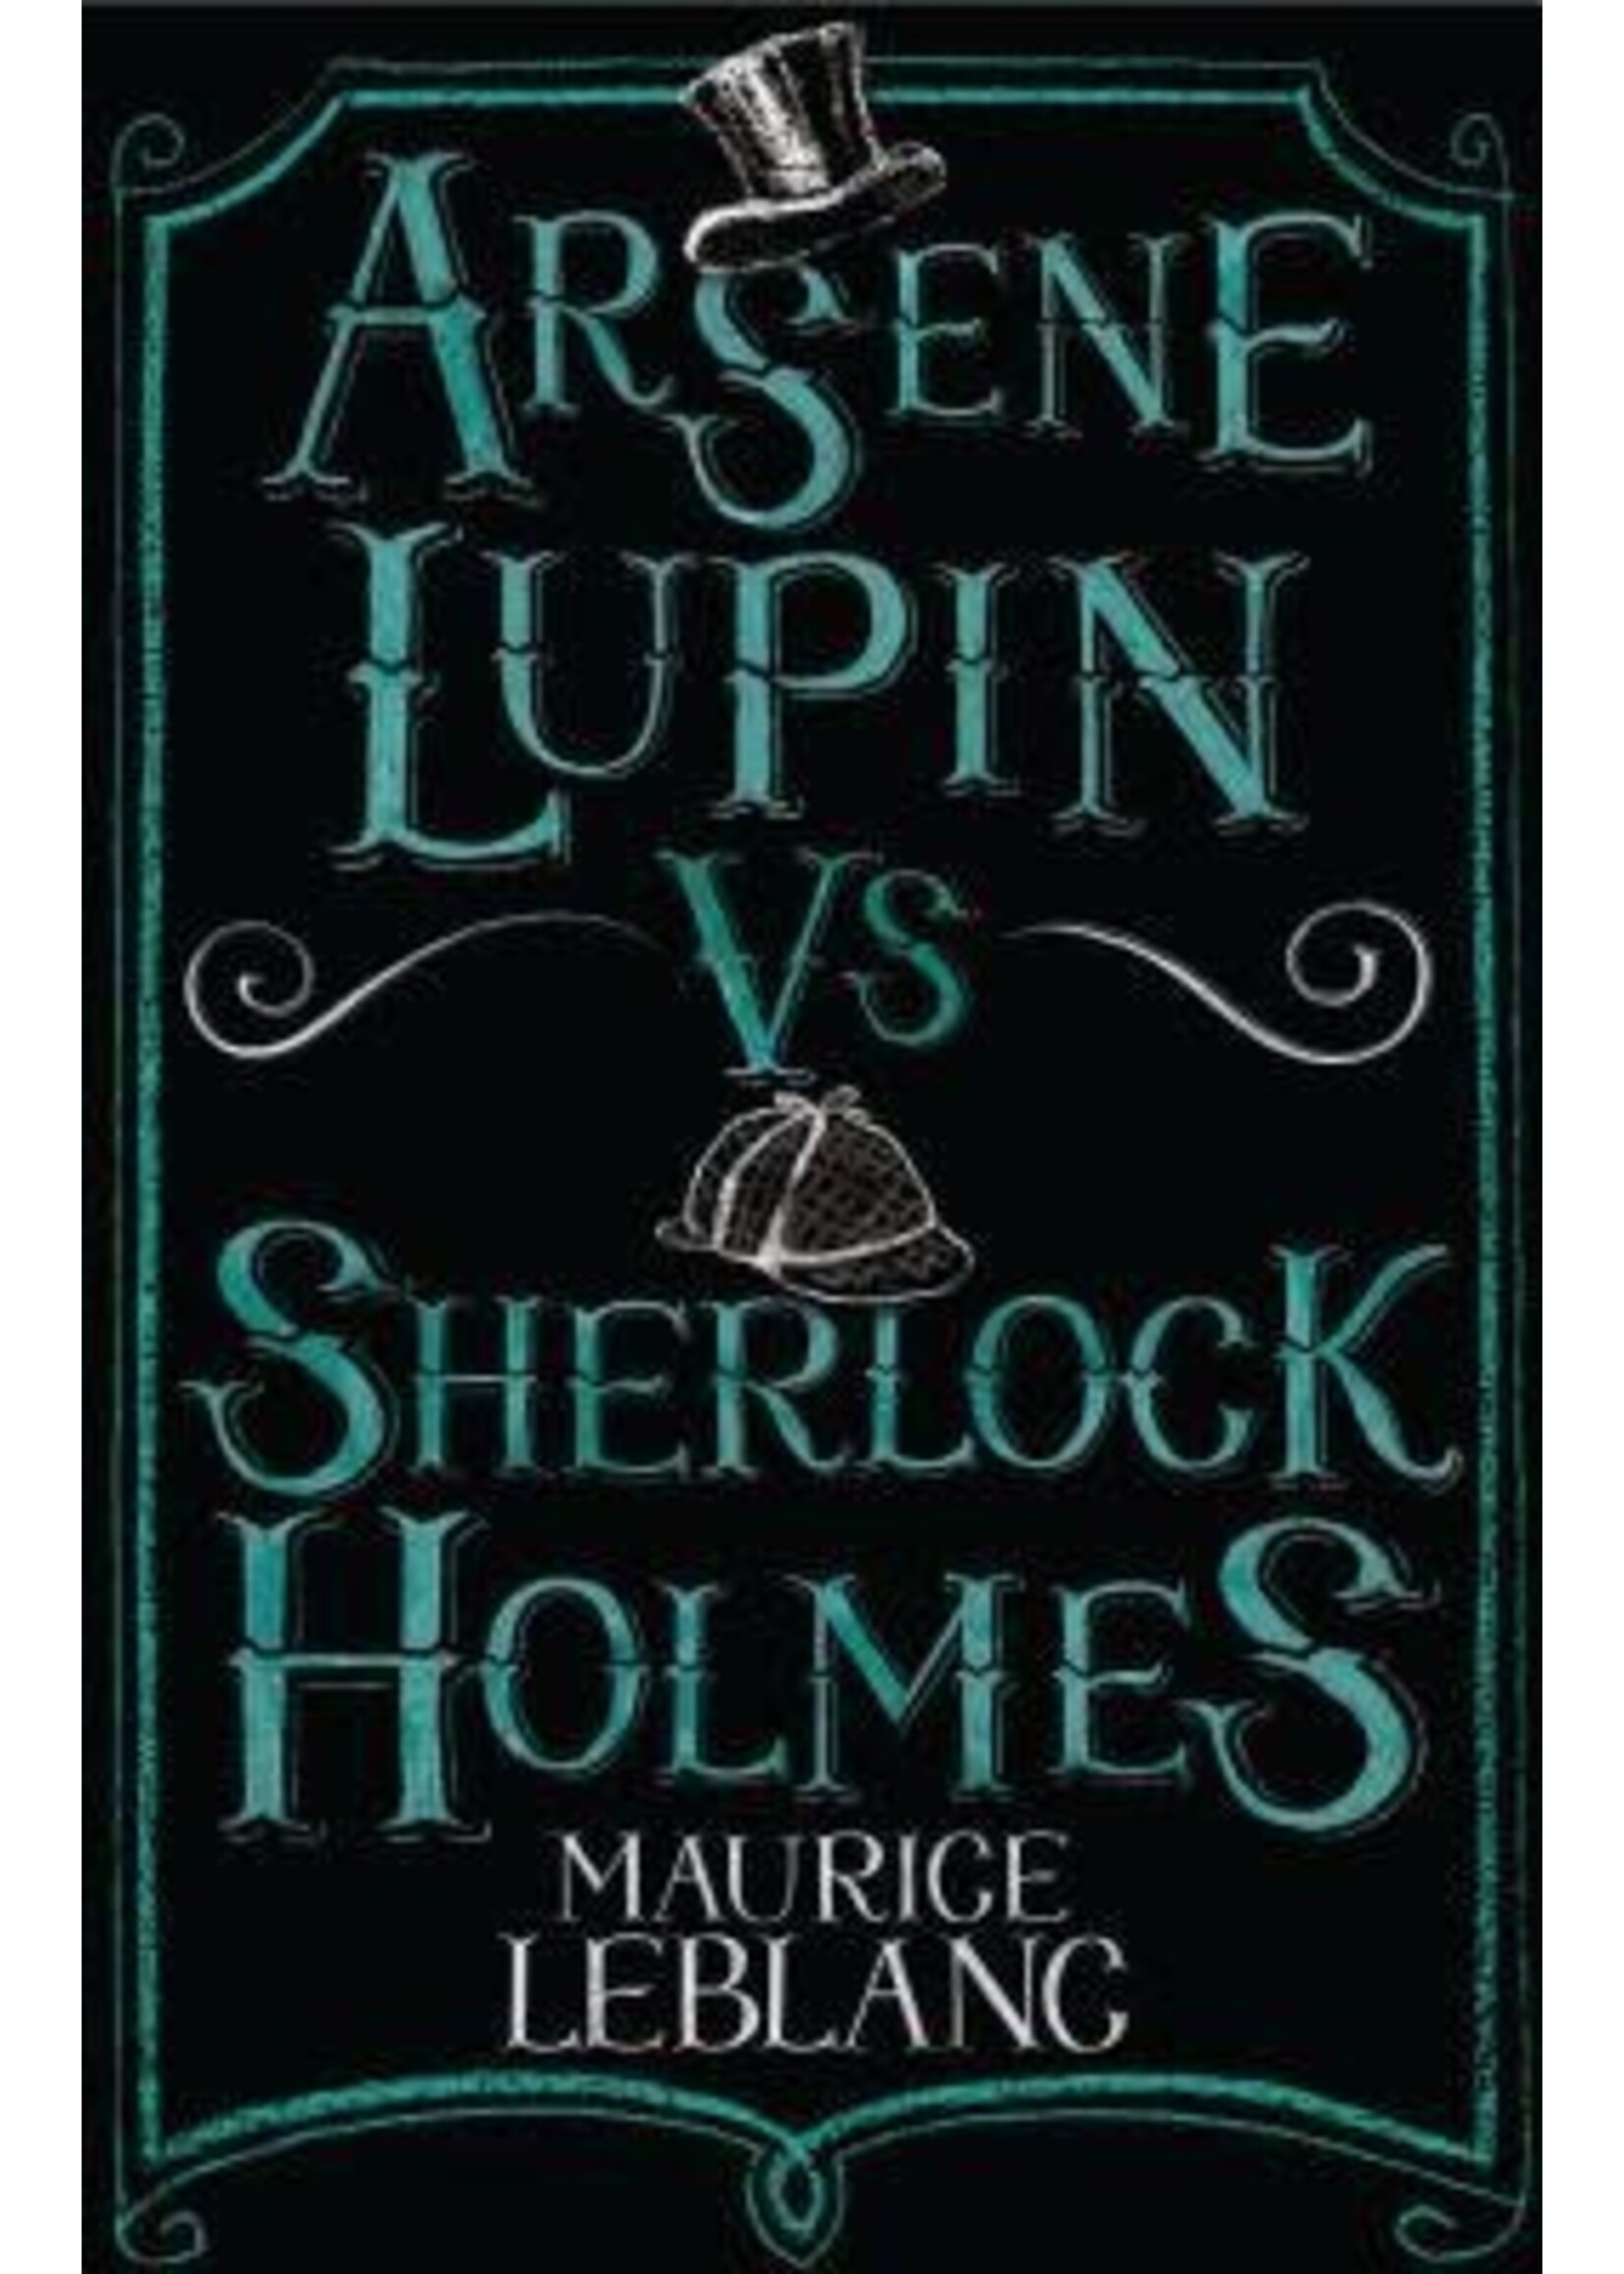 Arsene Lupin vs. Sherlock Holmes: 'The Blonde Lady' & 'The Jewish Lamp'. (Arsène Lupin #2) by Maurice Leblanc